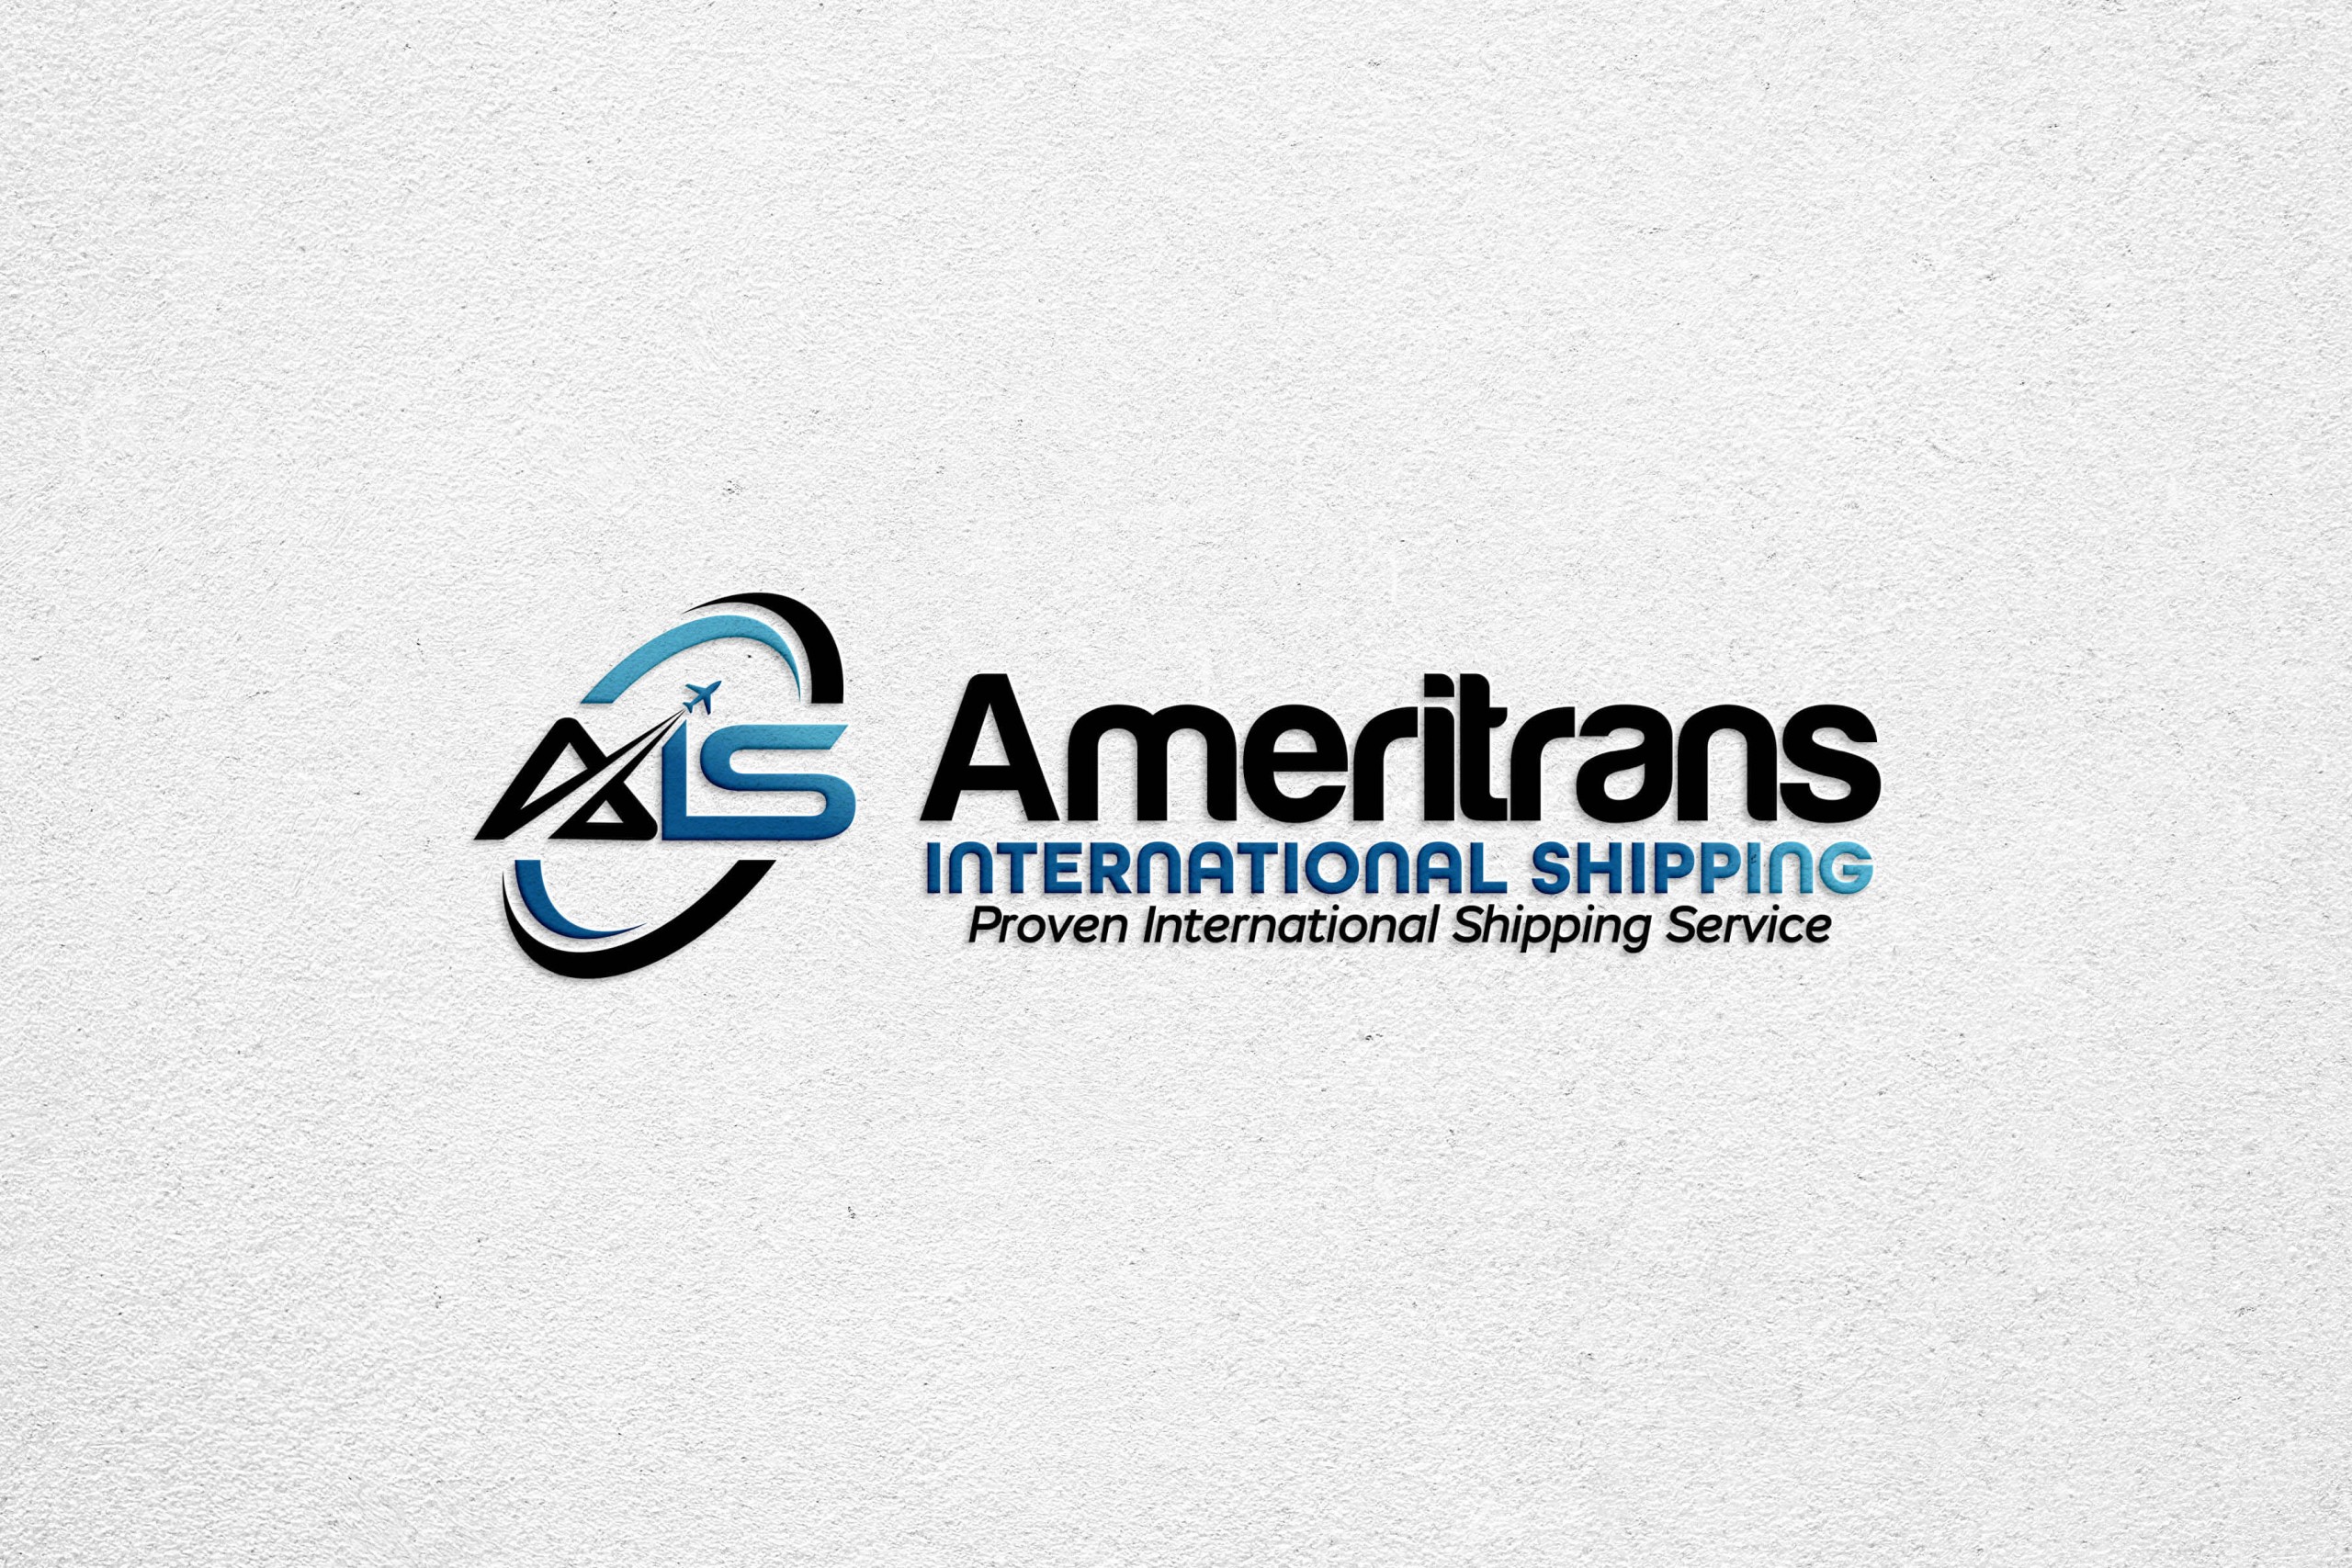 Ameritrans Freight International